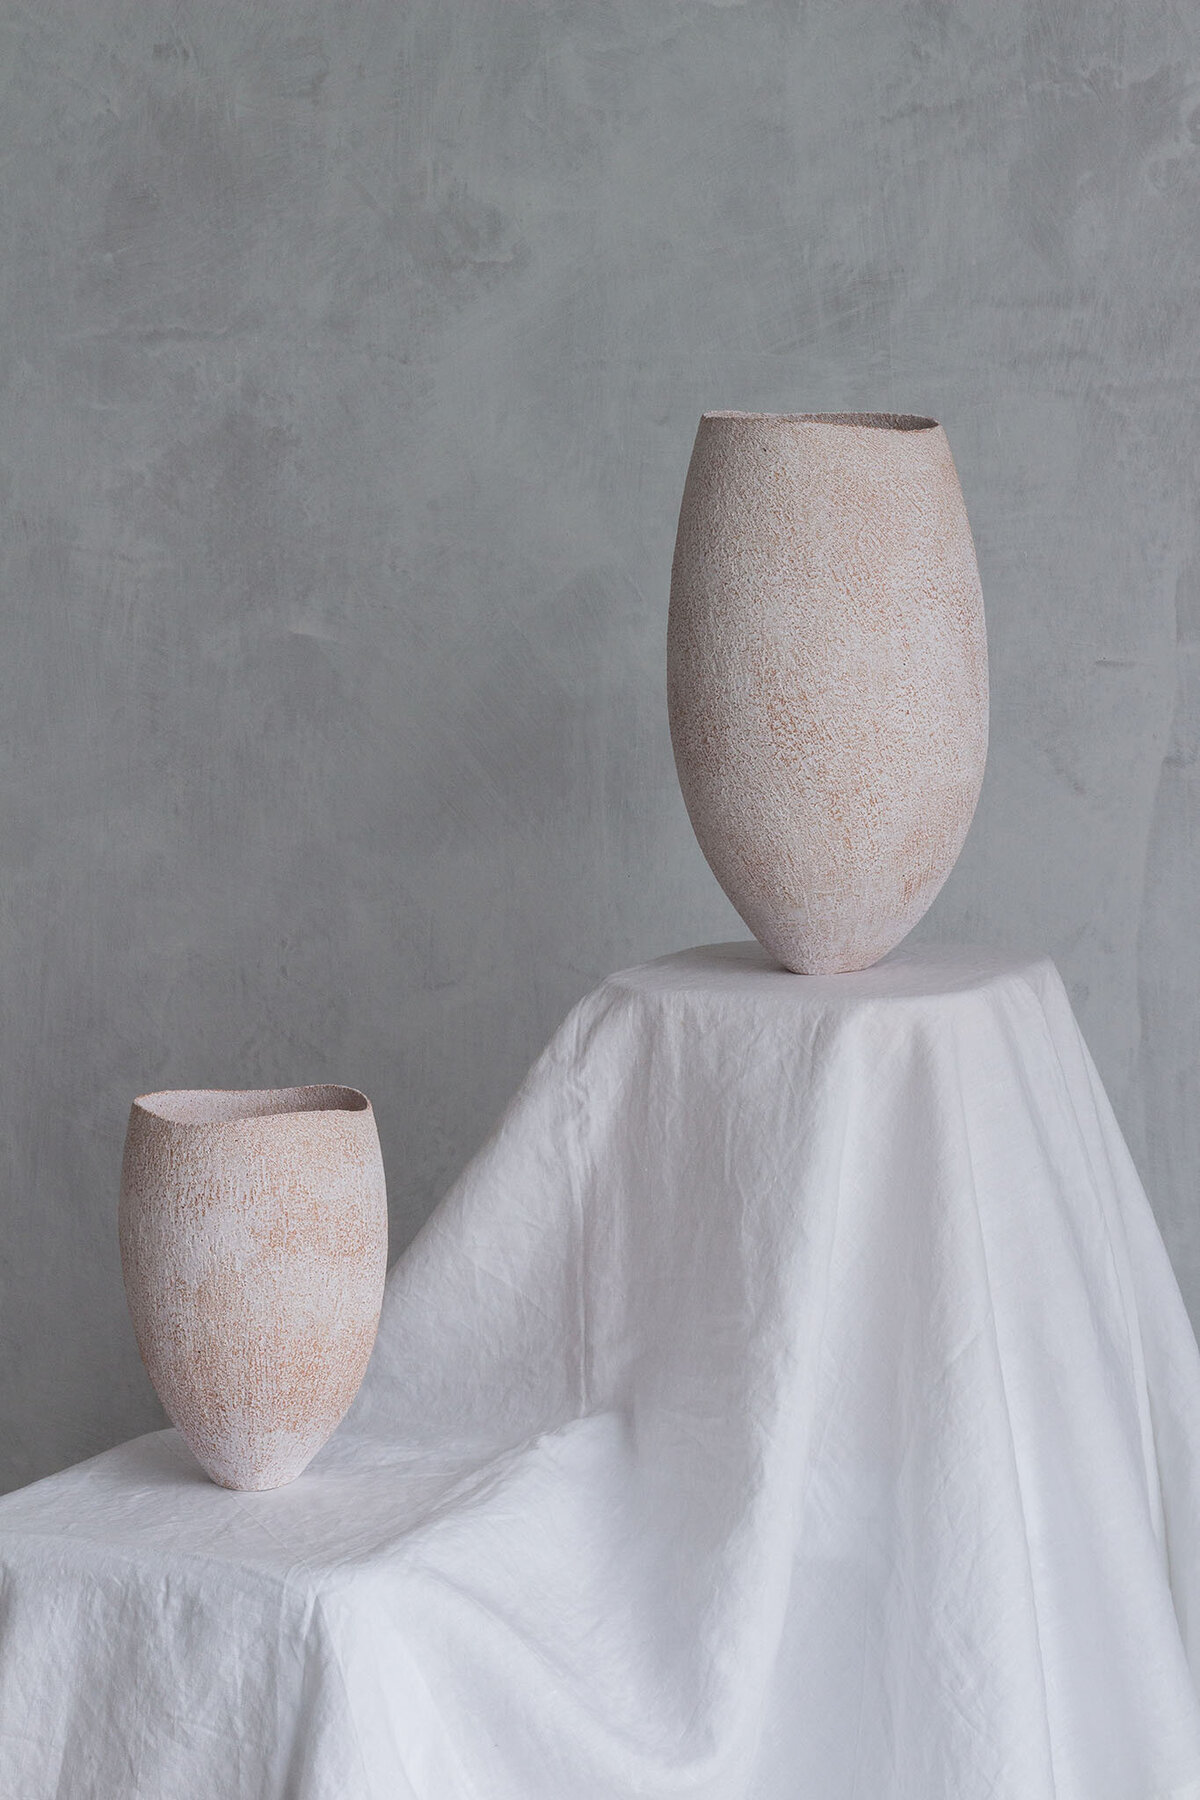 Yasha-Butler-Ceramic-Lithic-Collection-Pergamon-01-2022-10-2048px